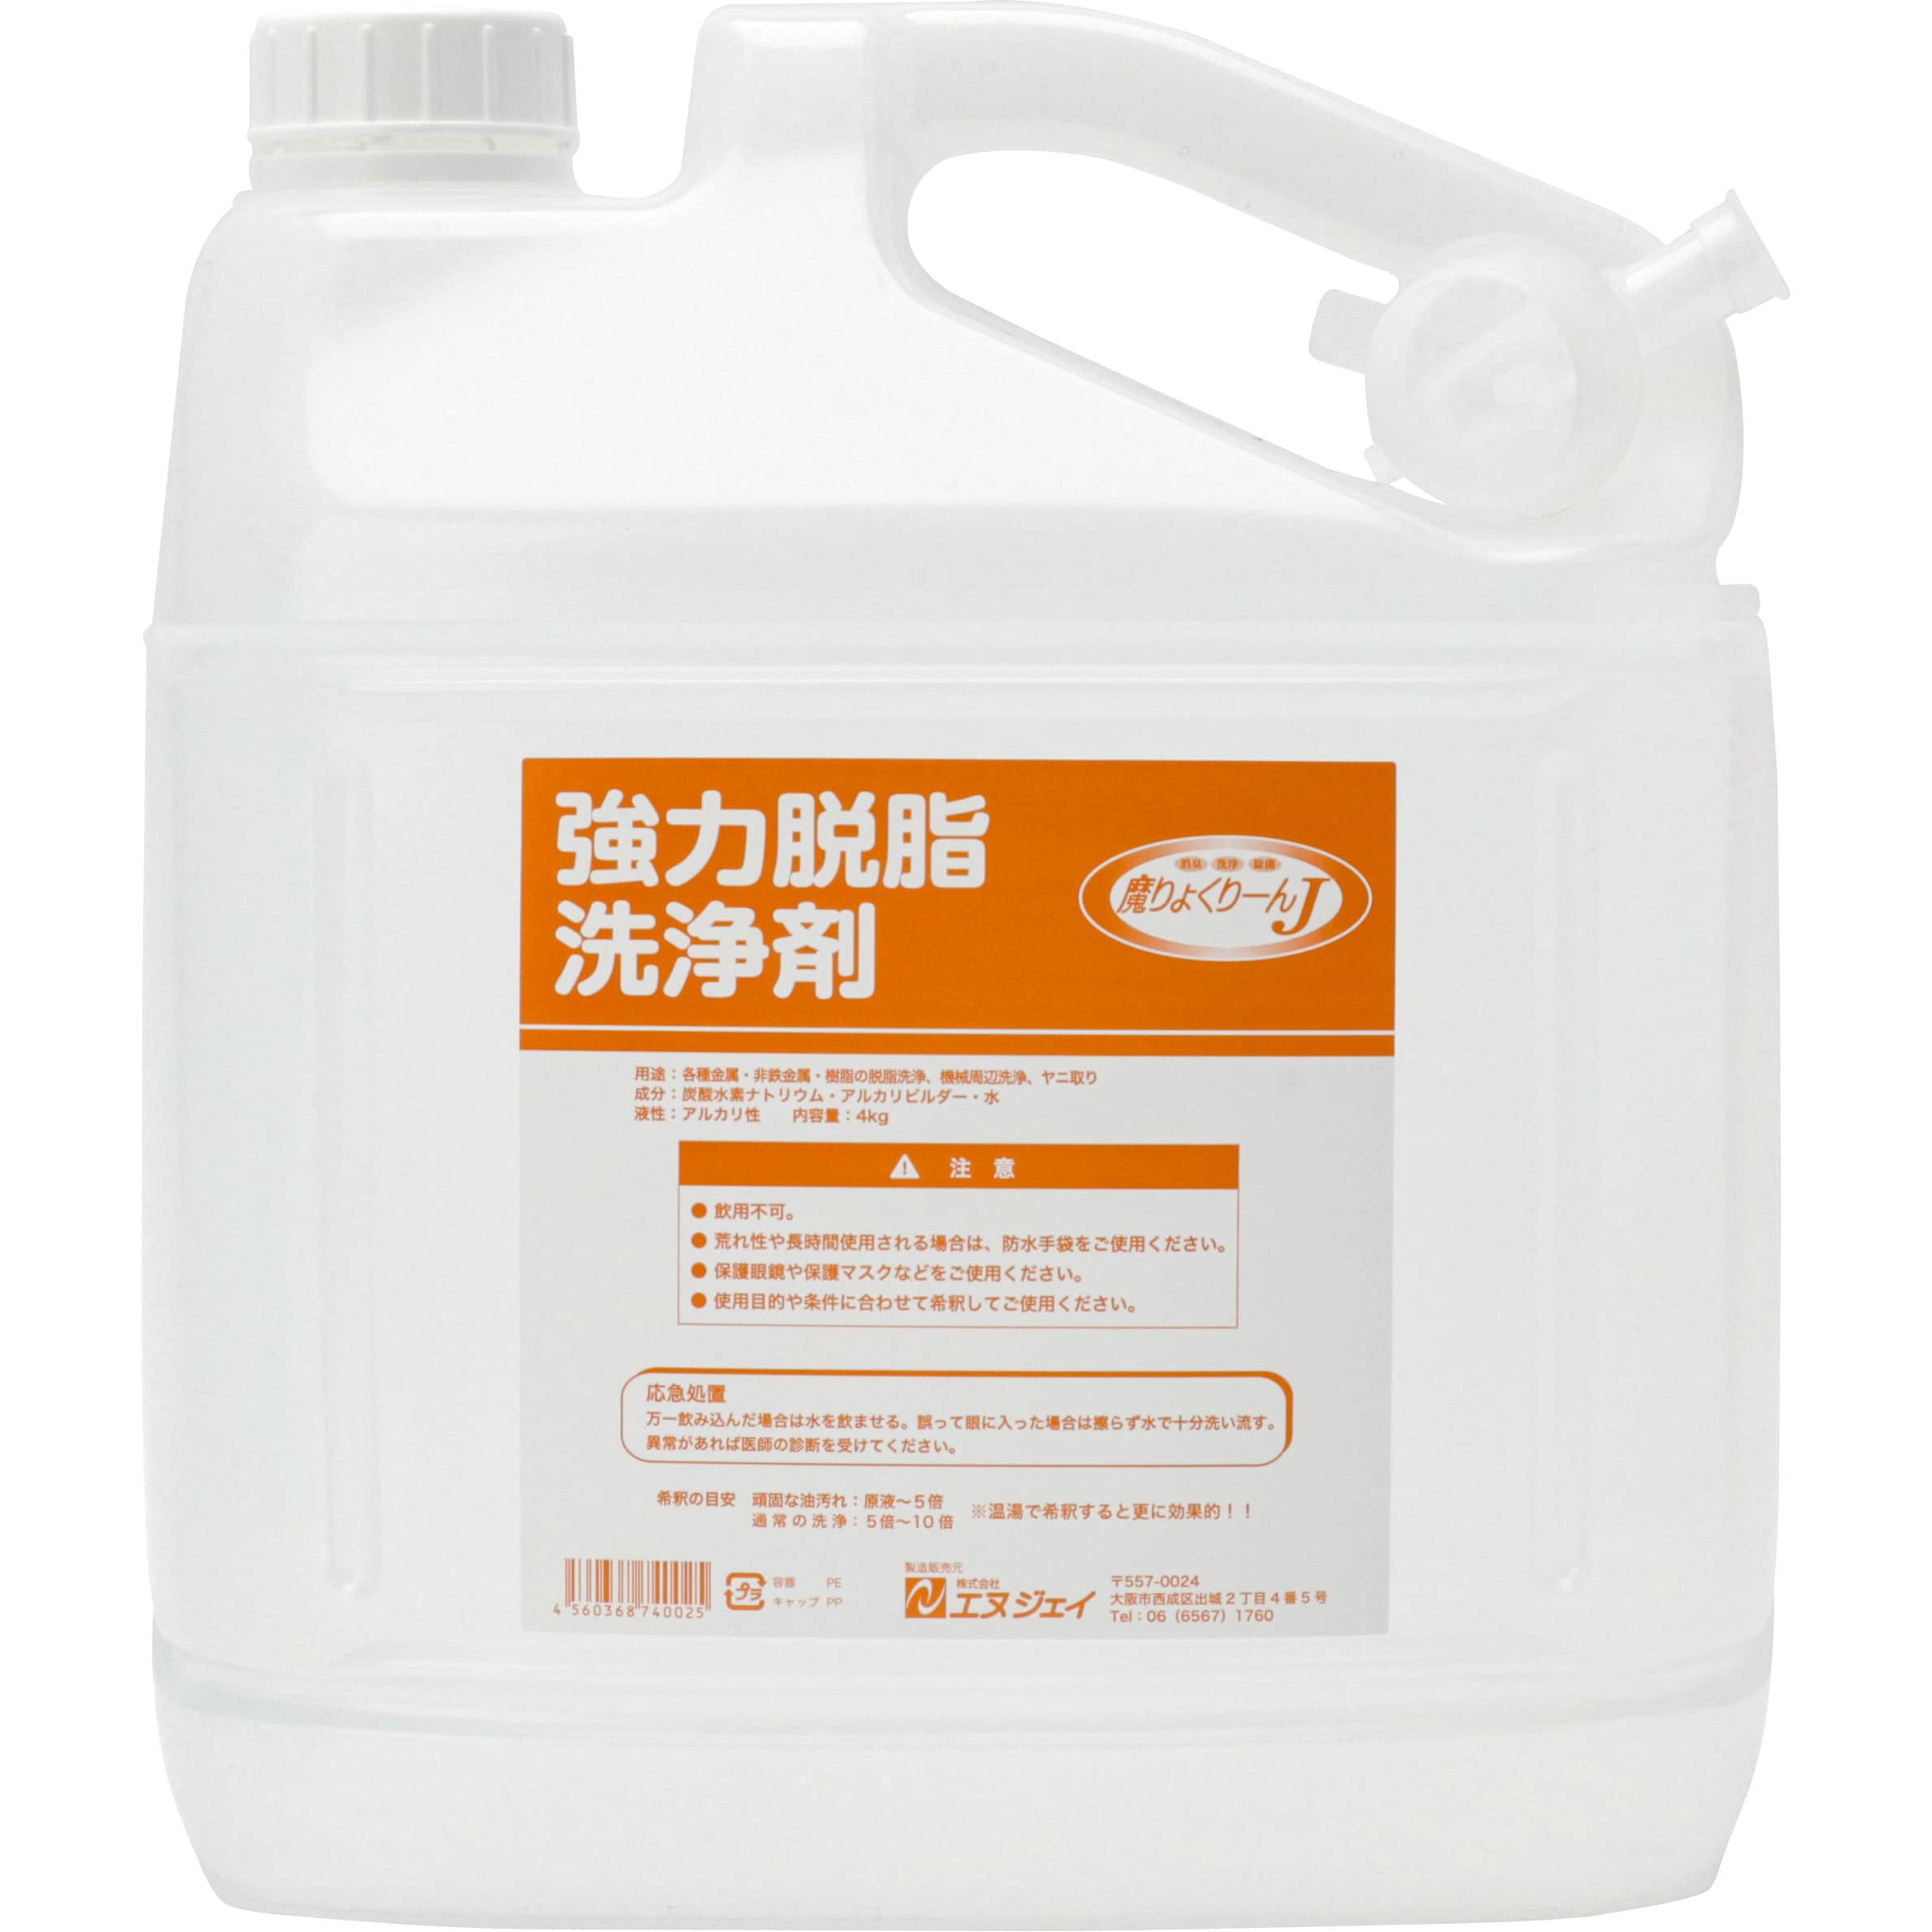 MRY-4J 強力脱脂洗浄剤 1缶(4L) エヌジェイ 【通販サイトMonotaRO】